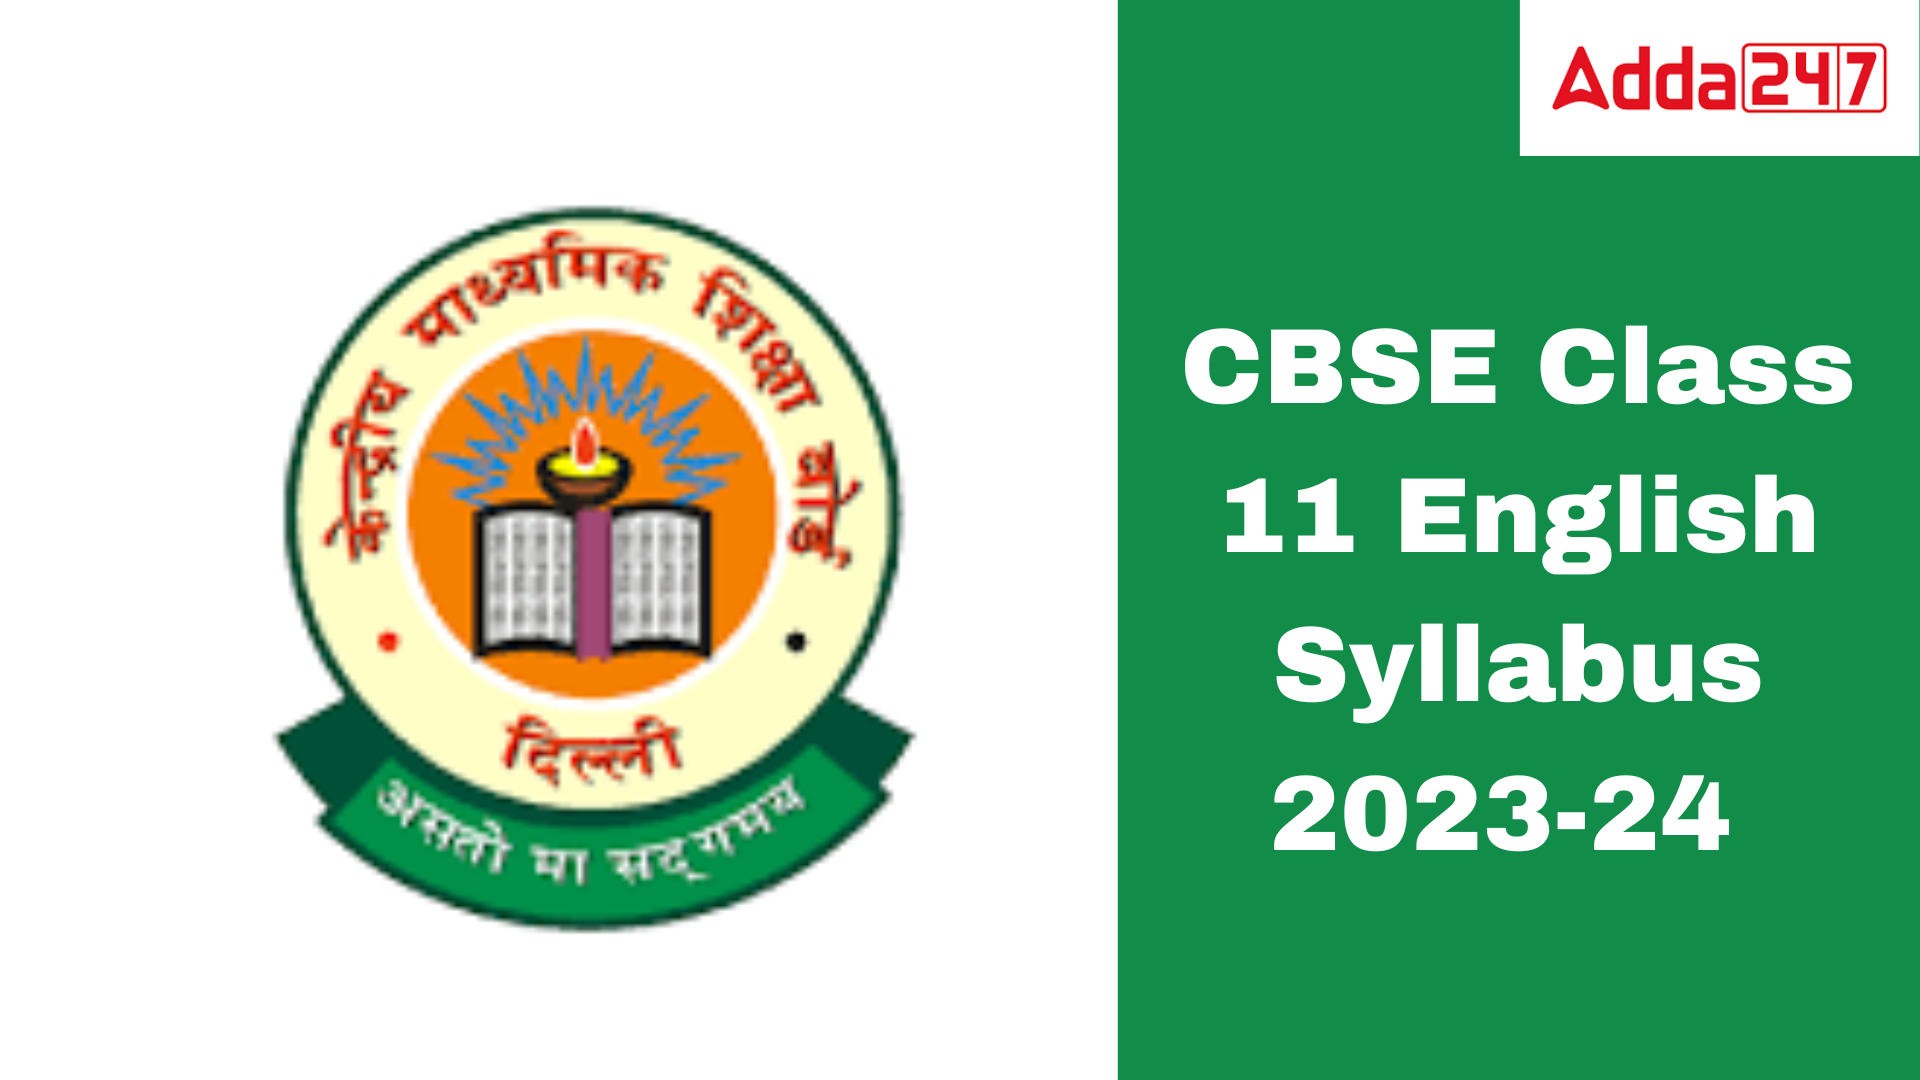 CBSE Class 11 English Syllabus 2023-24